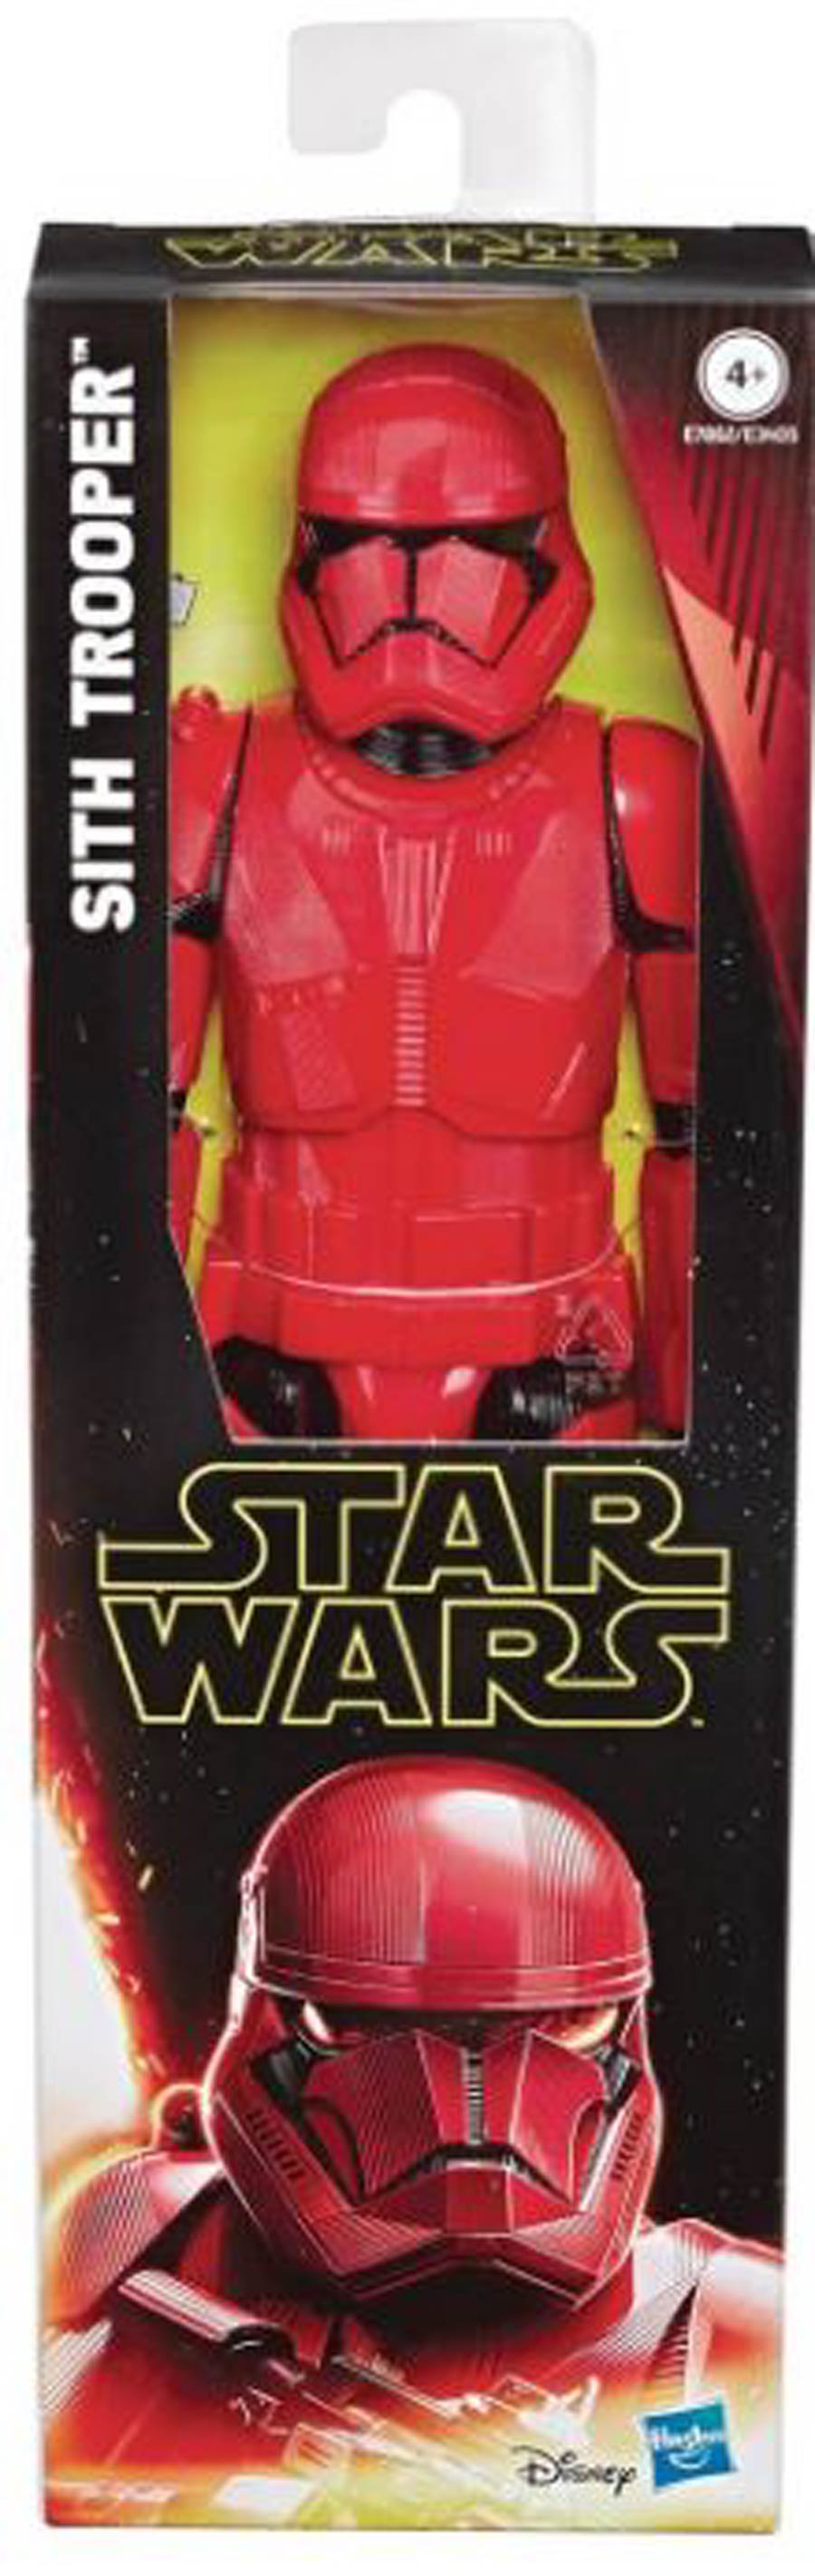 Star Wars Episode IX Rise Of Skywalker Hero Series 12-Inch Action Figure Assortment 201901 - Sith Trooper